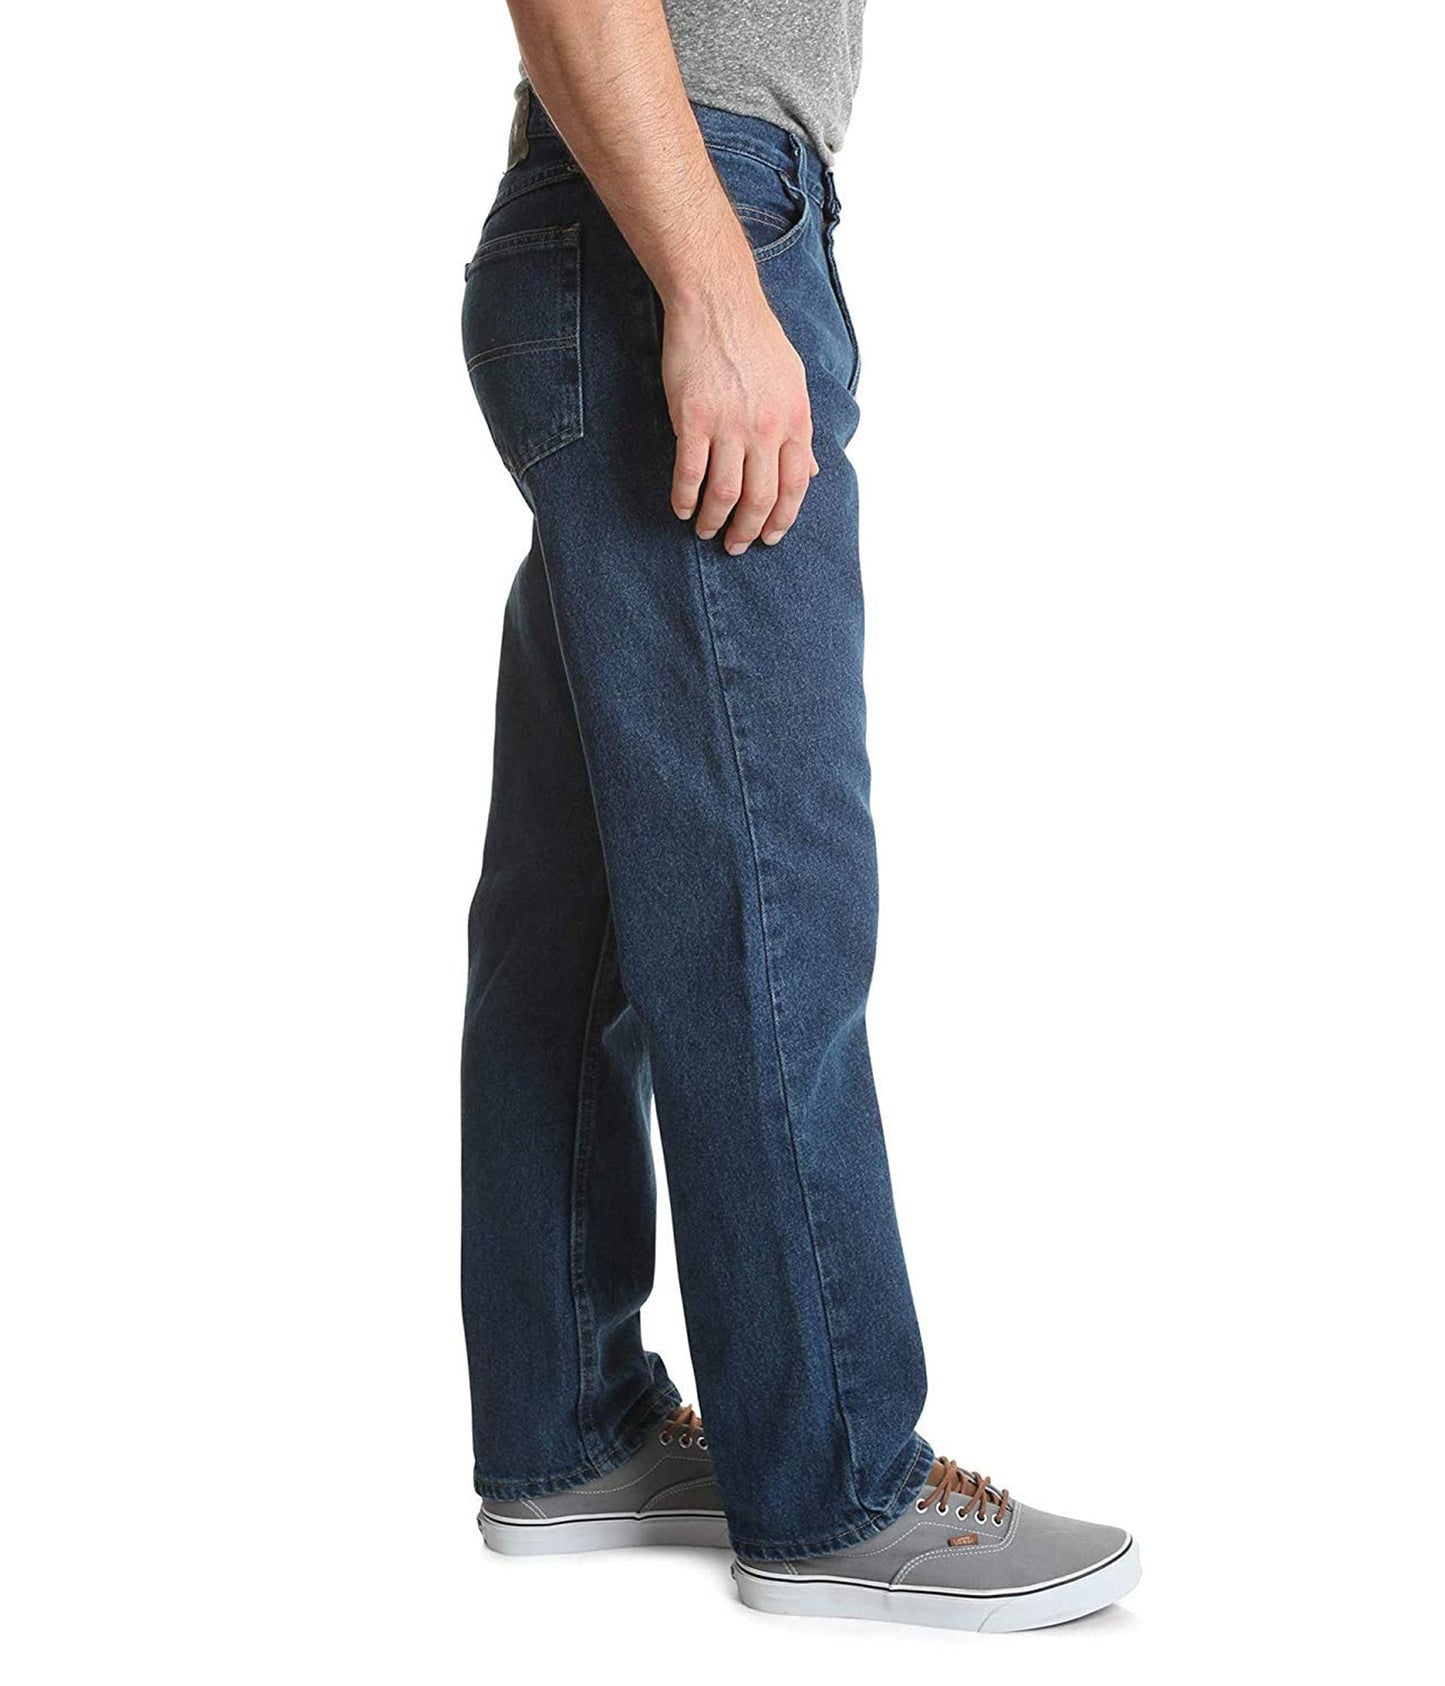 Wrangler Authentics Men's Big & Tall Classic 5-Pocket Relaxed Fit Cotton Jean, Dark Stonewash, 44W x 34L